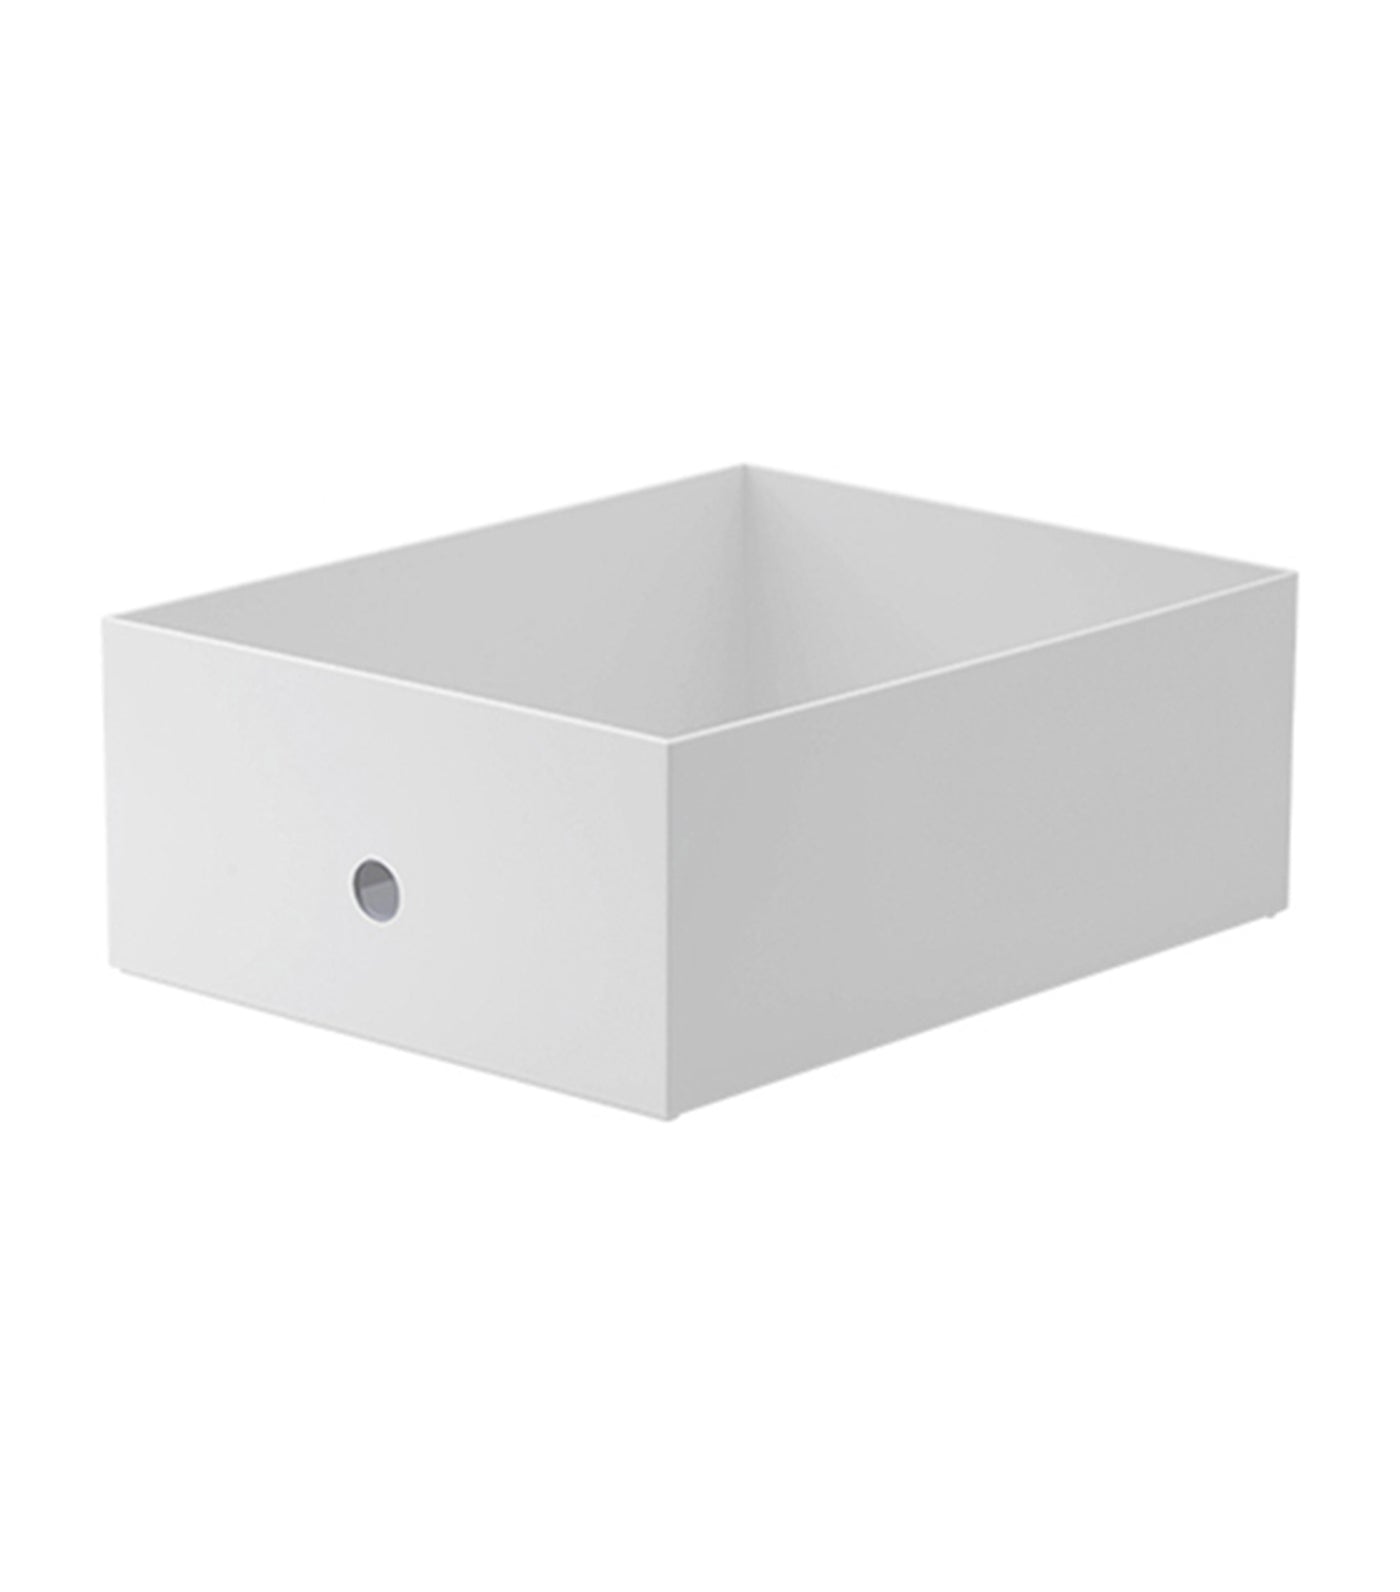 MakeRoom Flat Square File Storage Box - Gray